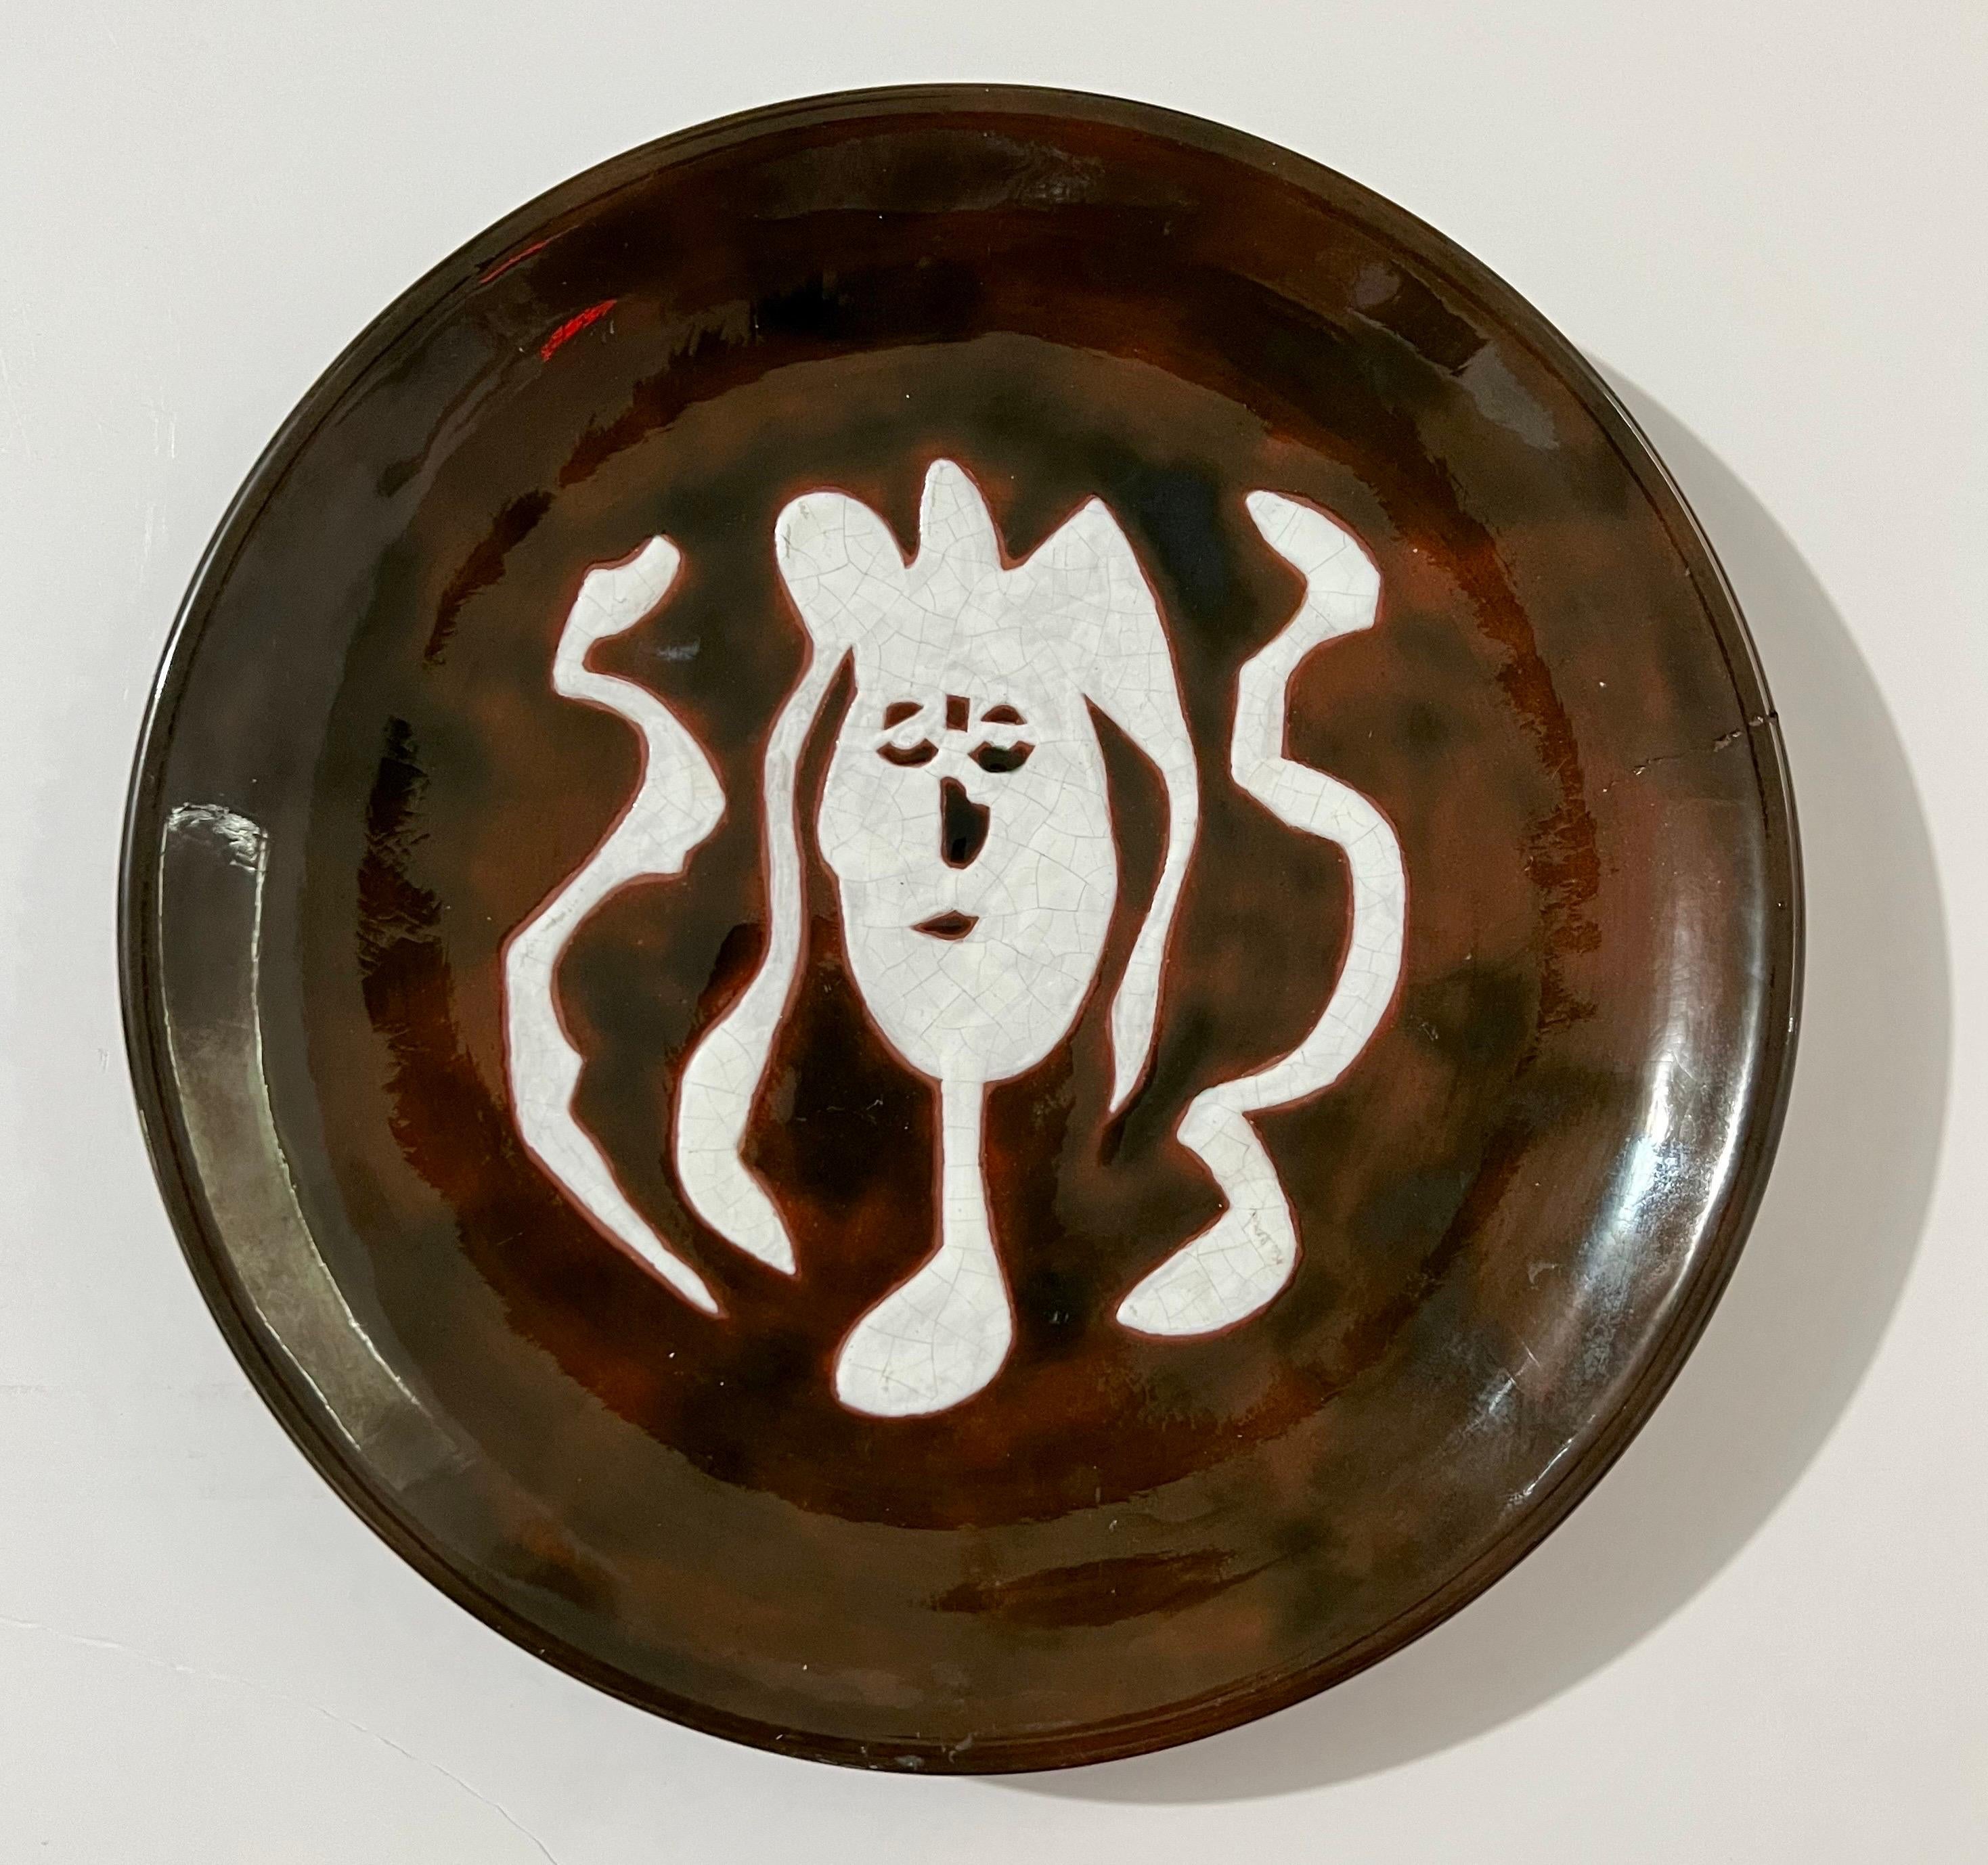 Vintage French Modernist Jean Lurcat Glazed Ceramic Art Plate Sant-Vicens France 1